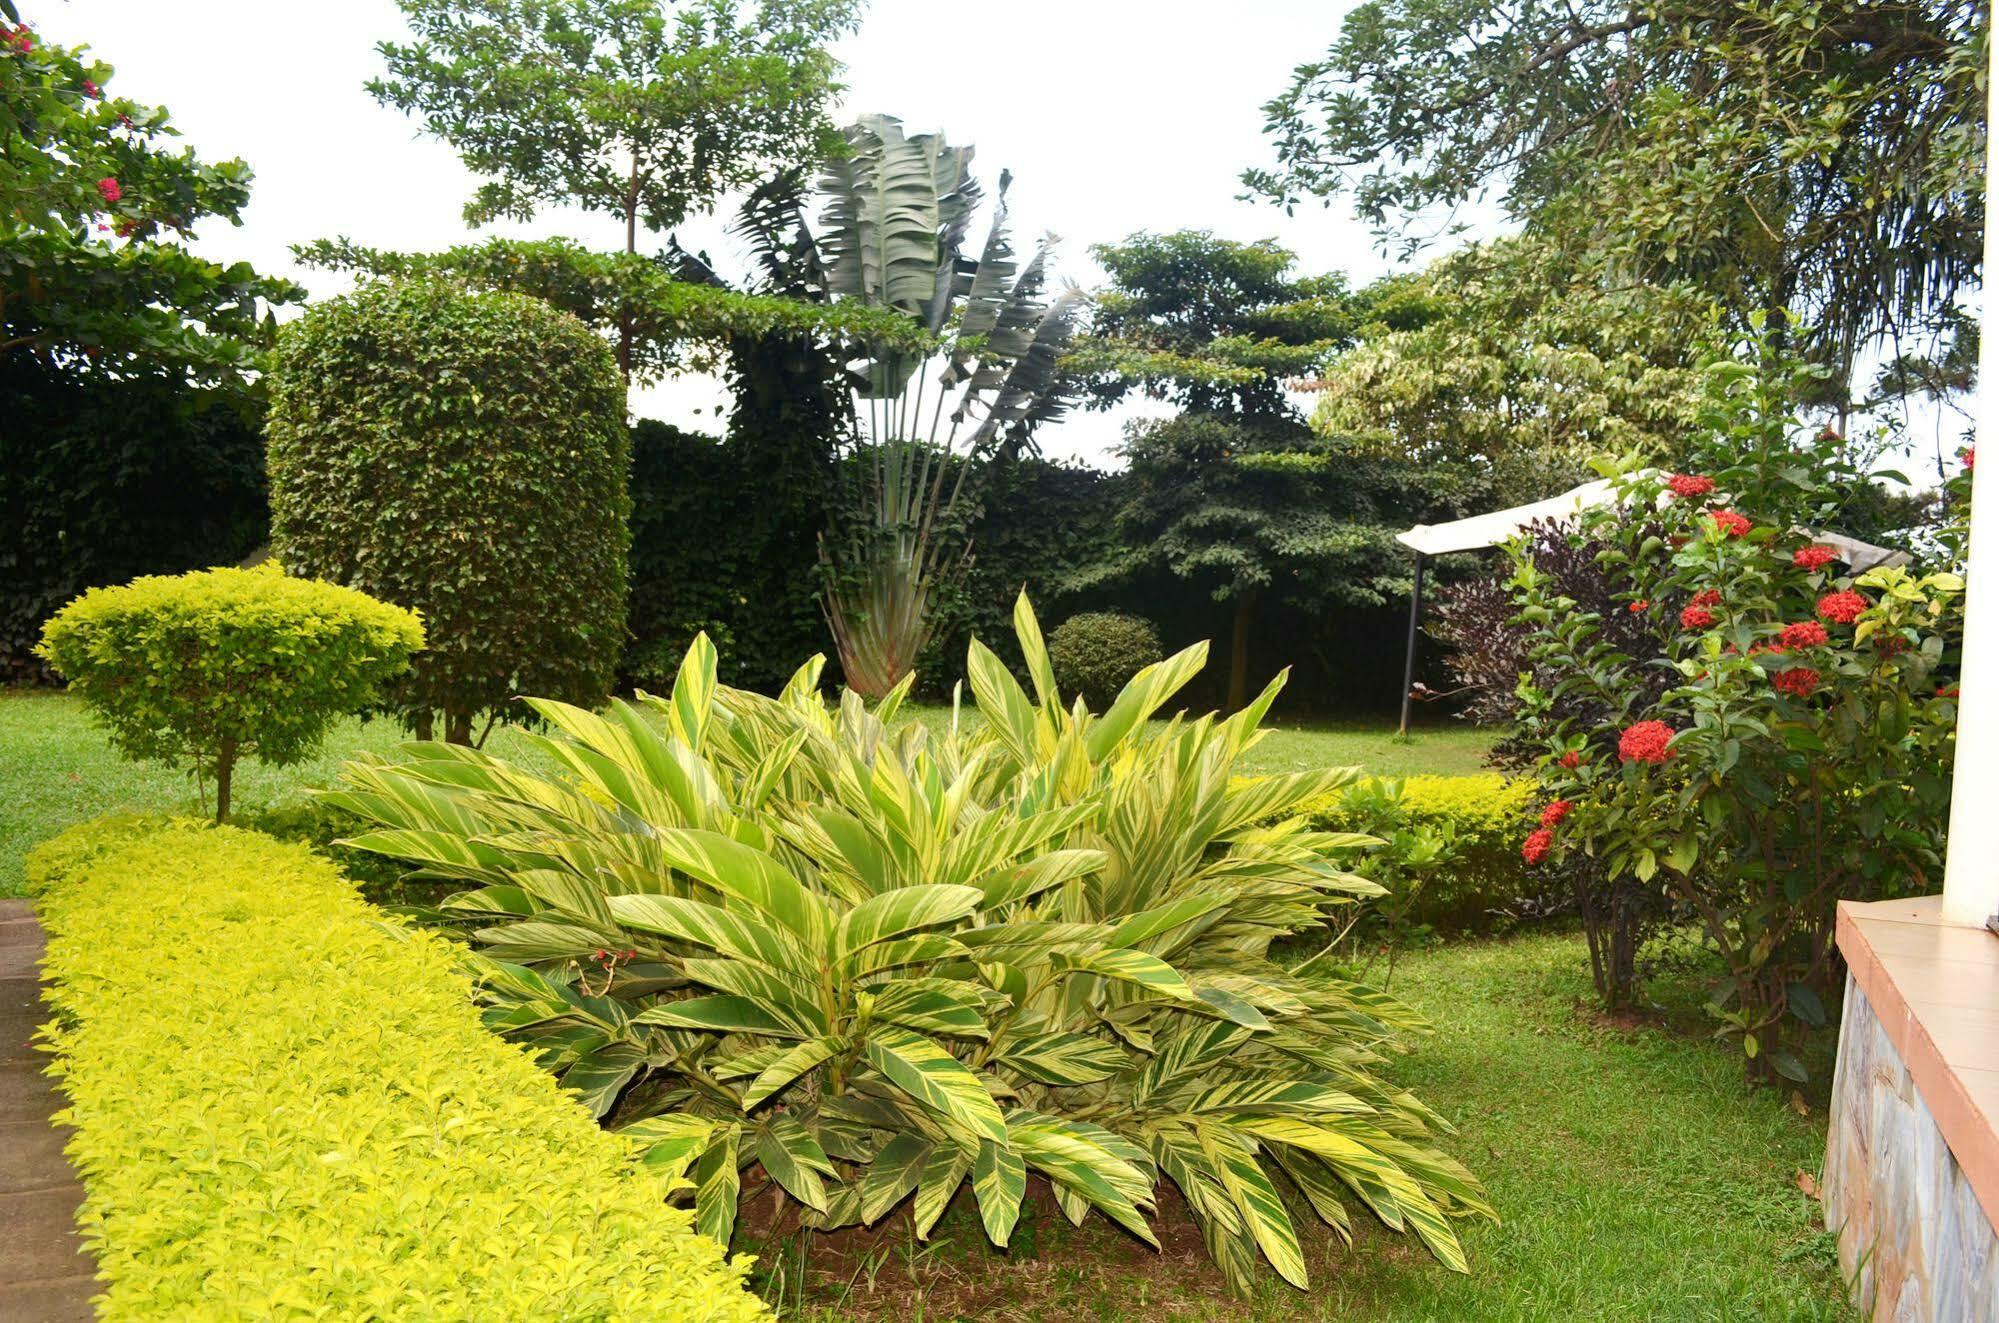 Home Inn Kampala Exterior photo